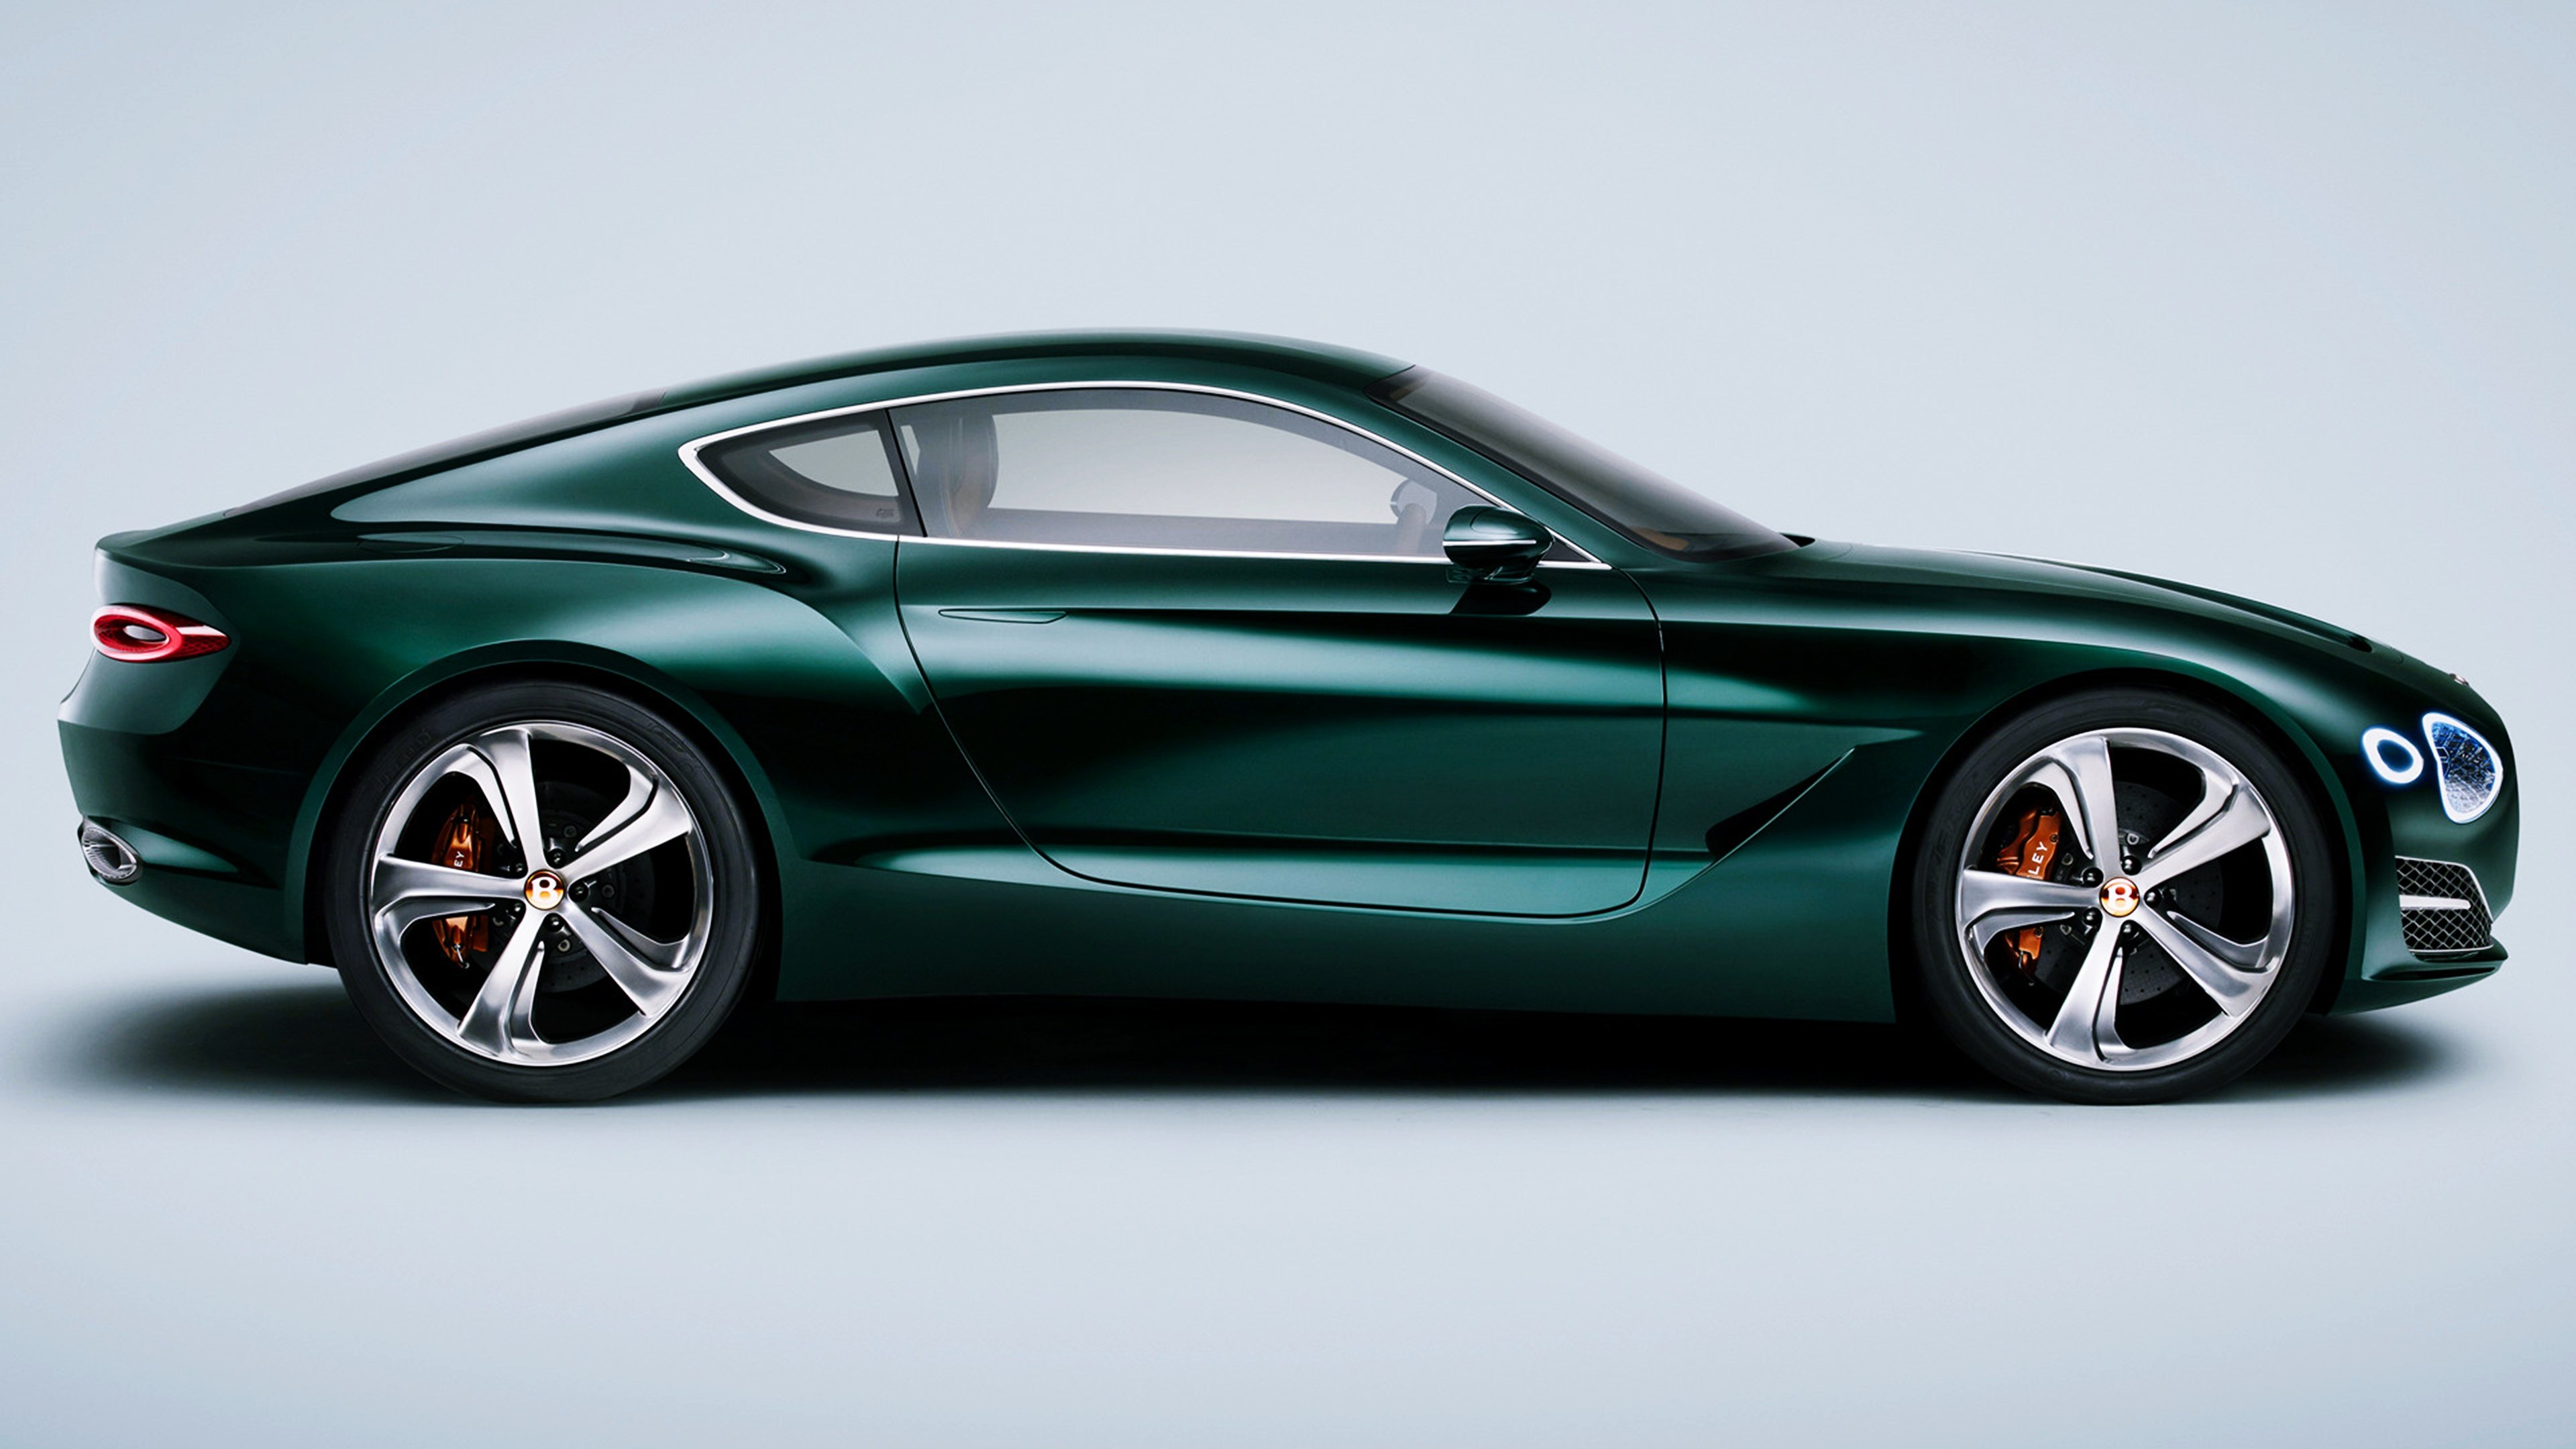 2015, Bentley, Exp, 10, Speed, 6, Green, Cars, Supercars, Luxury, Motors Wallpaper